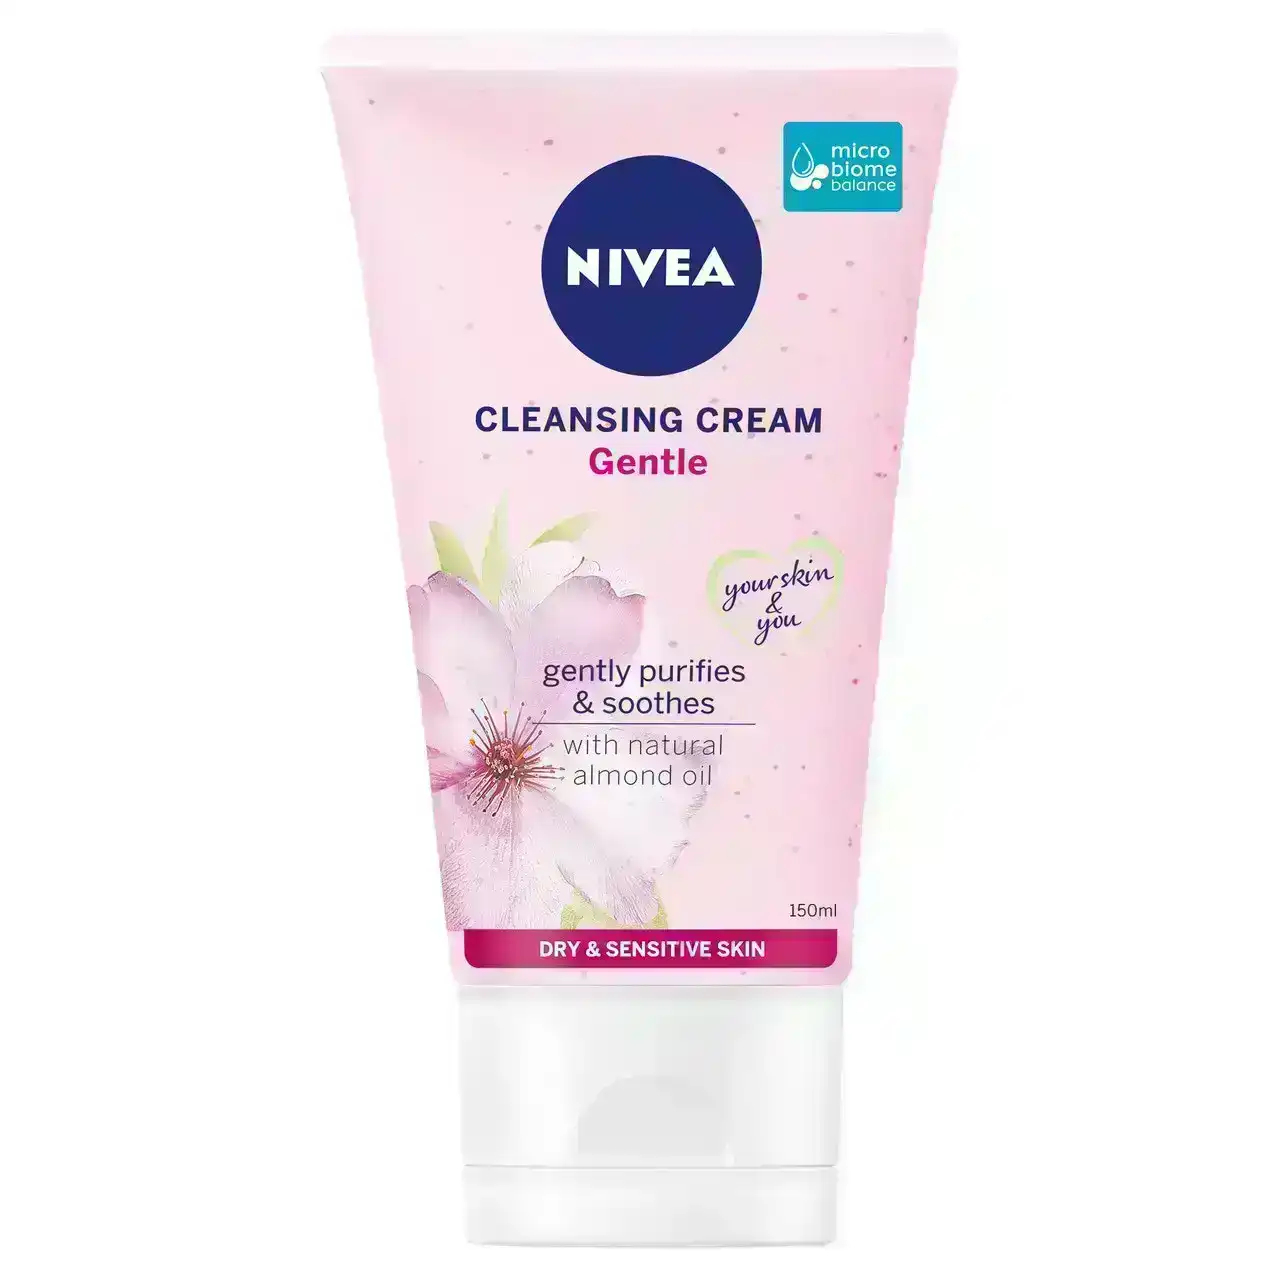 Nivea Gentle Cleansing Cream Wash 150ml